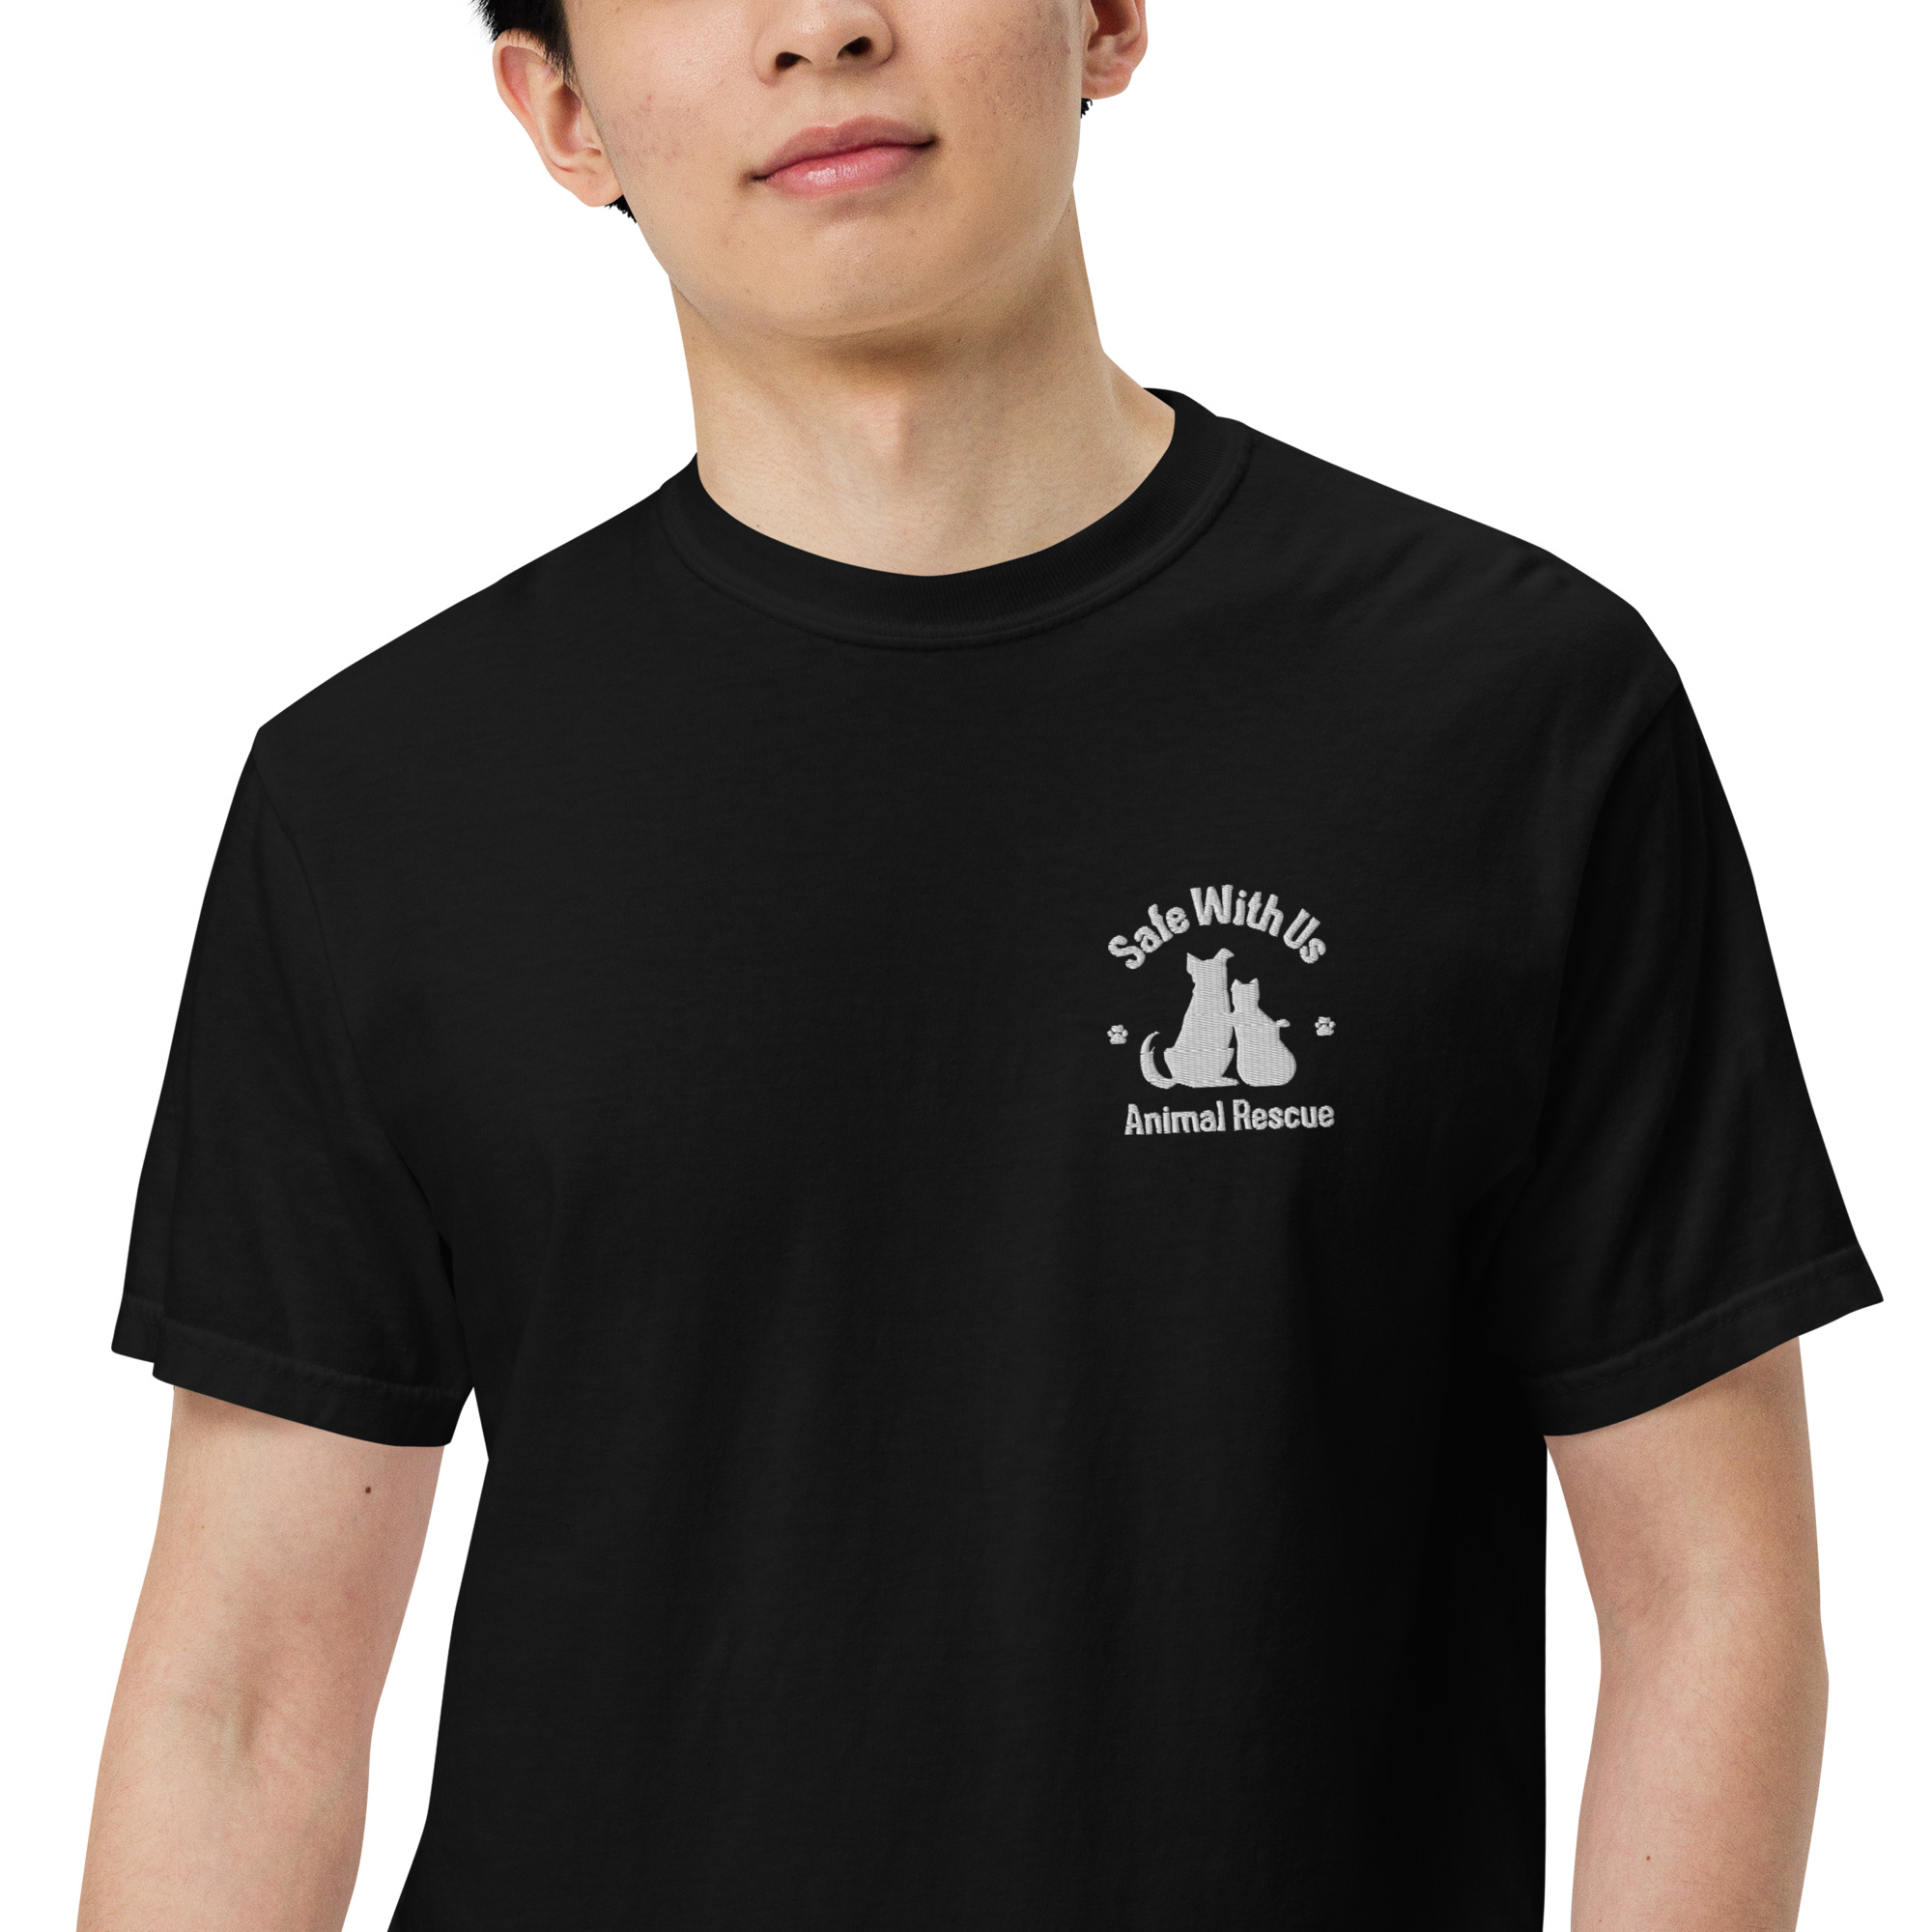 mens-garment-dyed-heavyweight-t-shirt-black-zoomed-in-2-6415fedc2451f-1.jpg